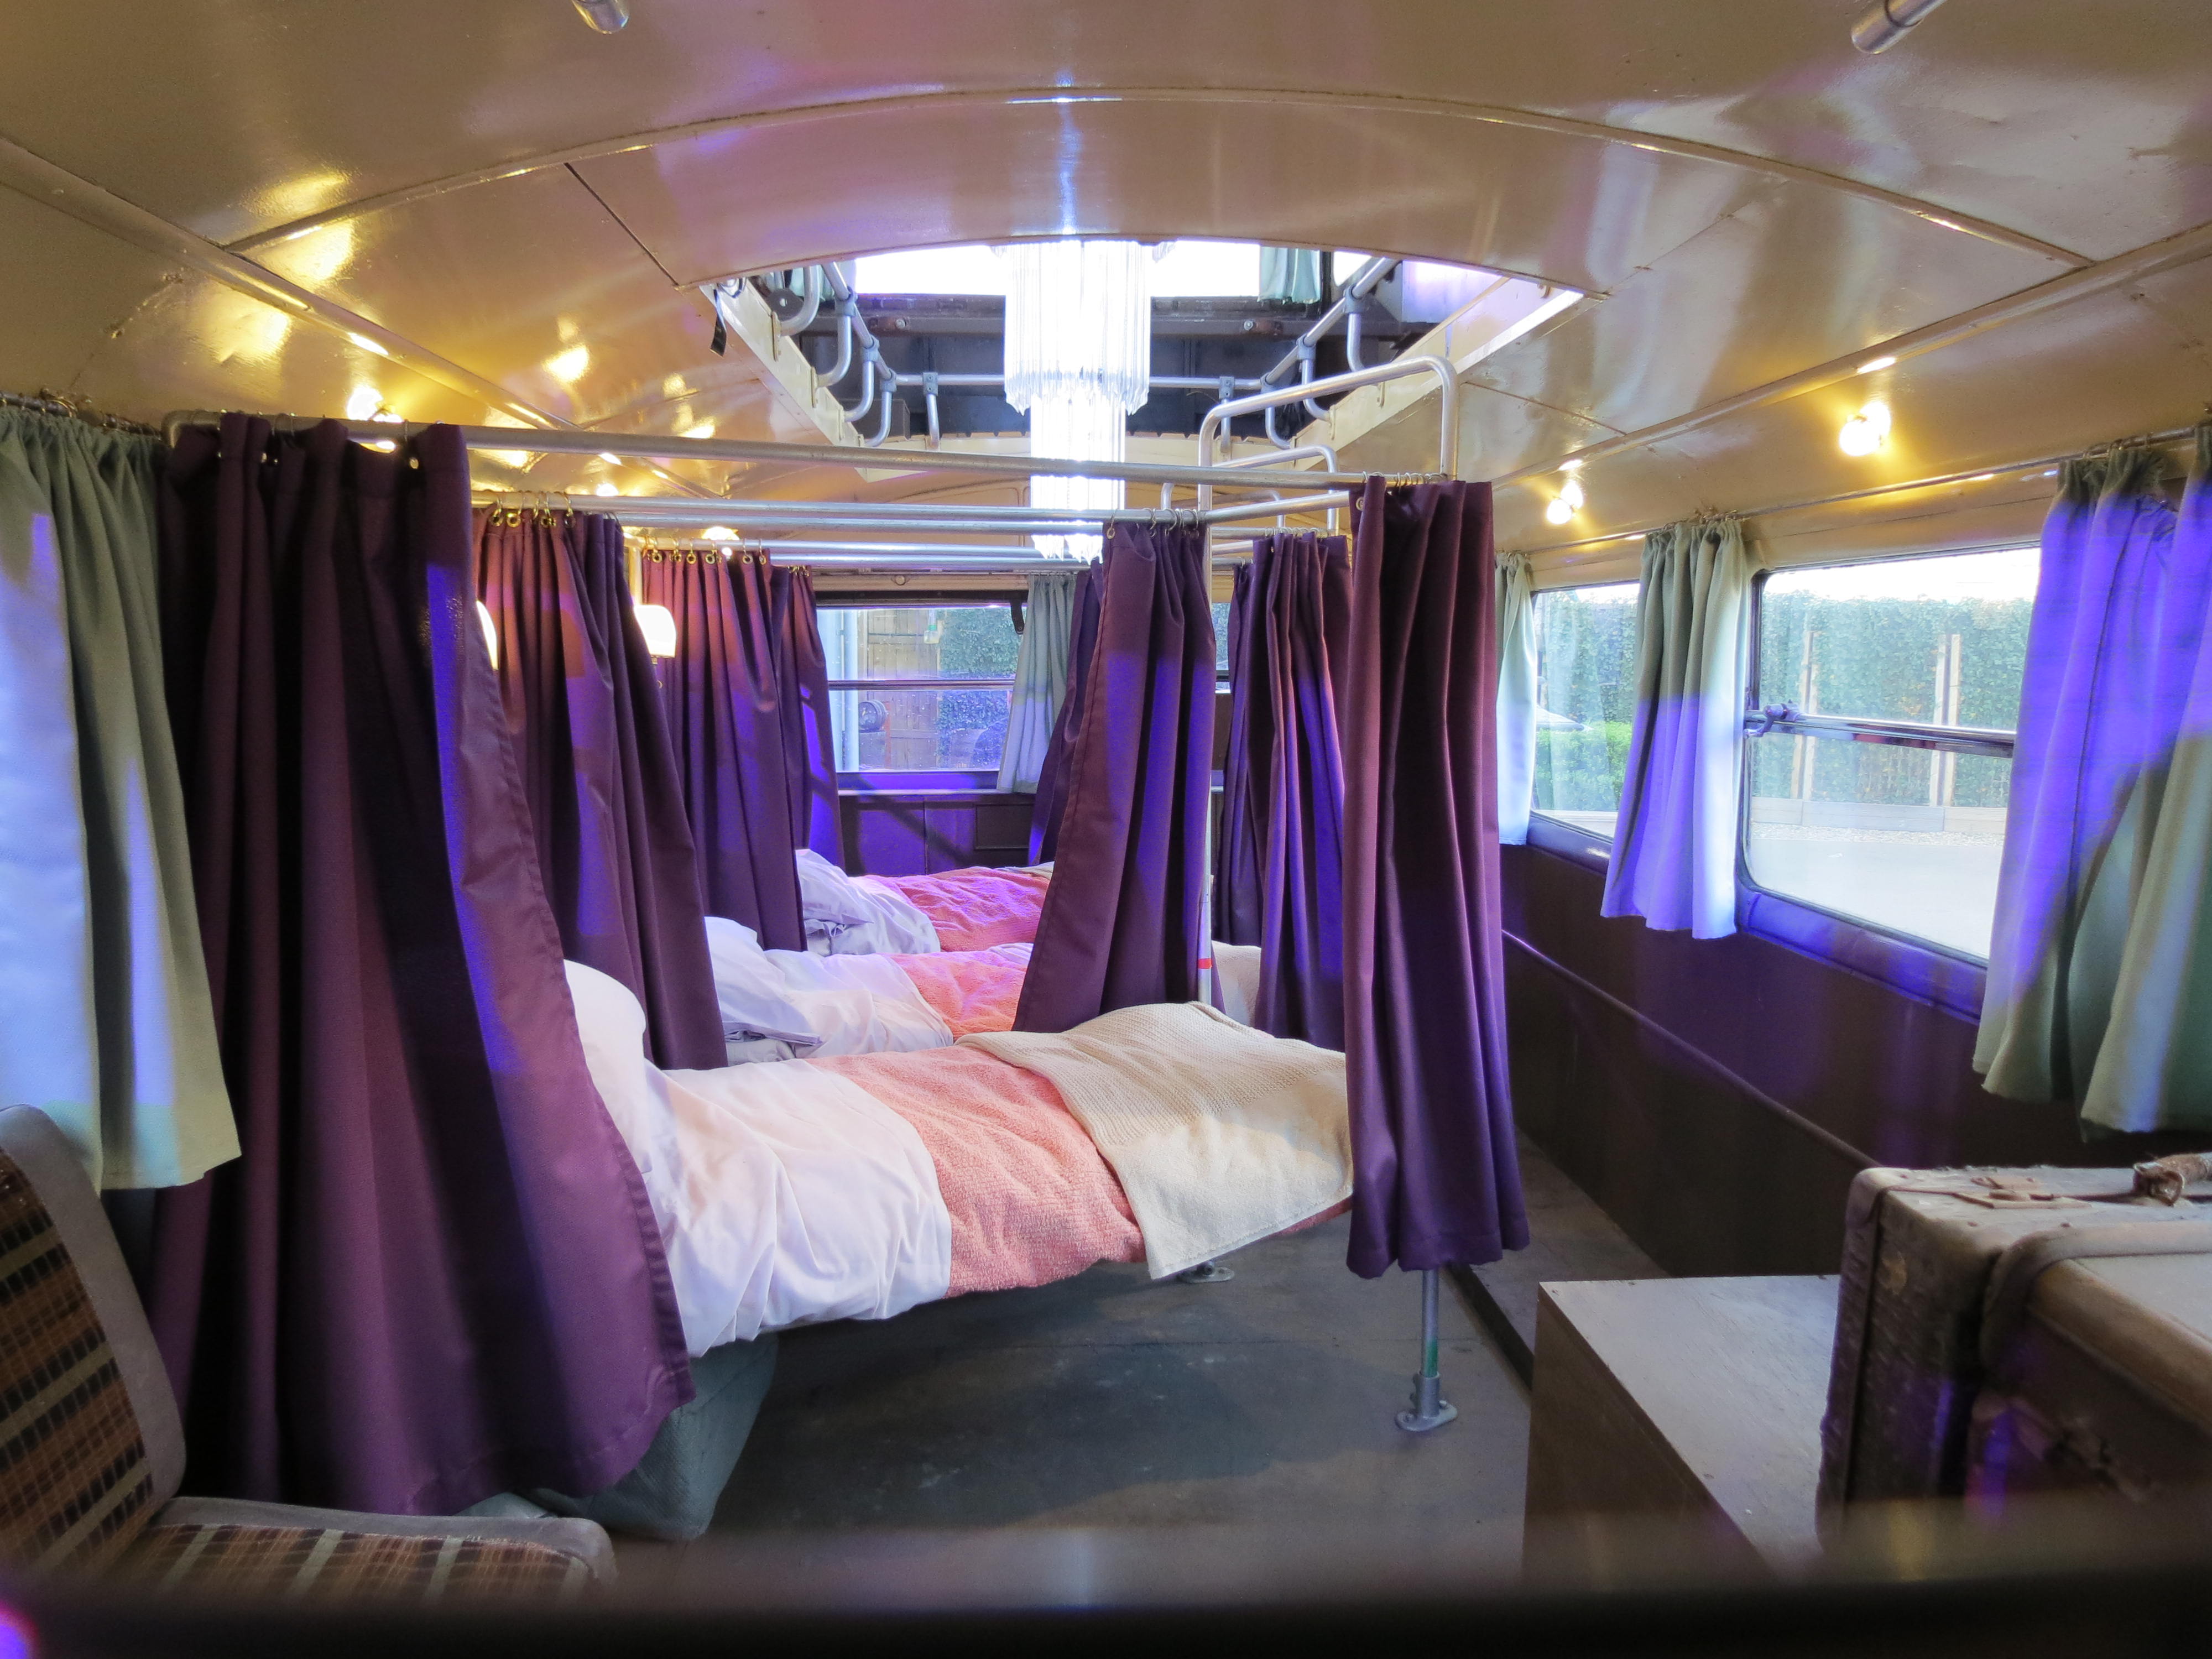 Harry Potter Studio Sets Tour Inside Bus By Sceptre63 On